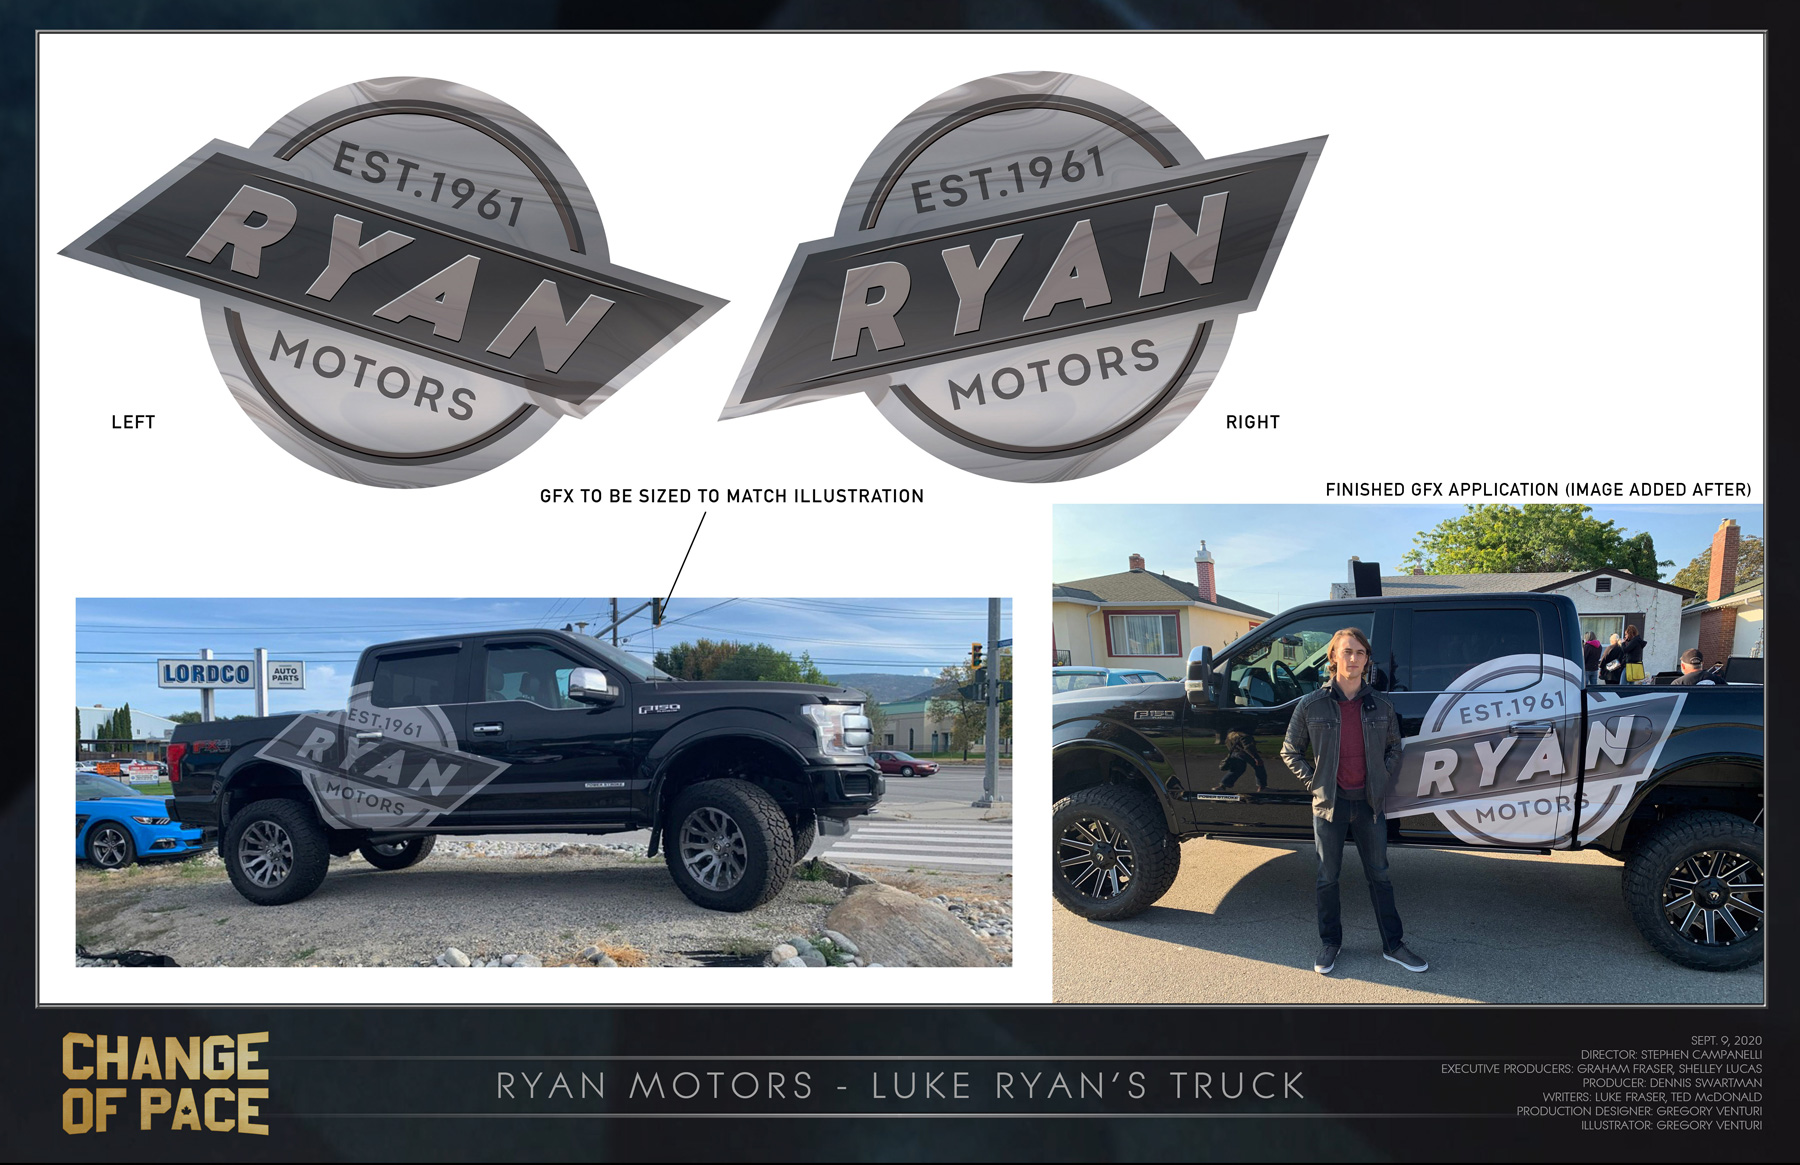 5 Drinkwater 'Ryan Motors Hangar' Luke Ryan's Truck Concept Art GV